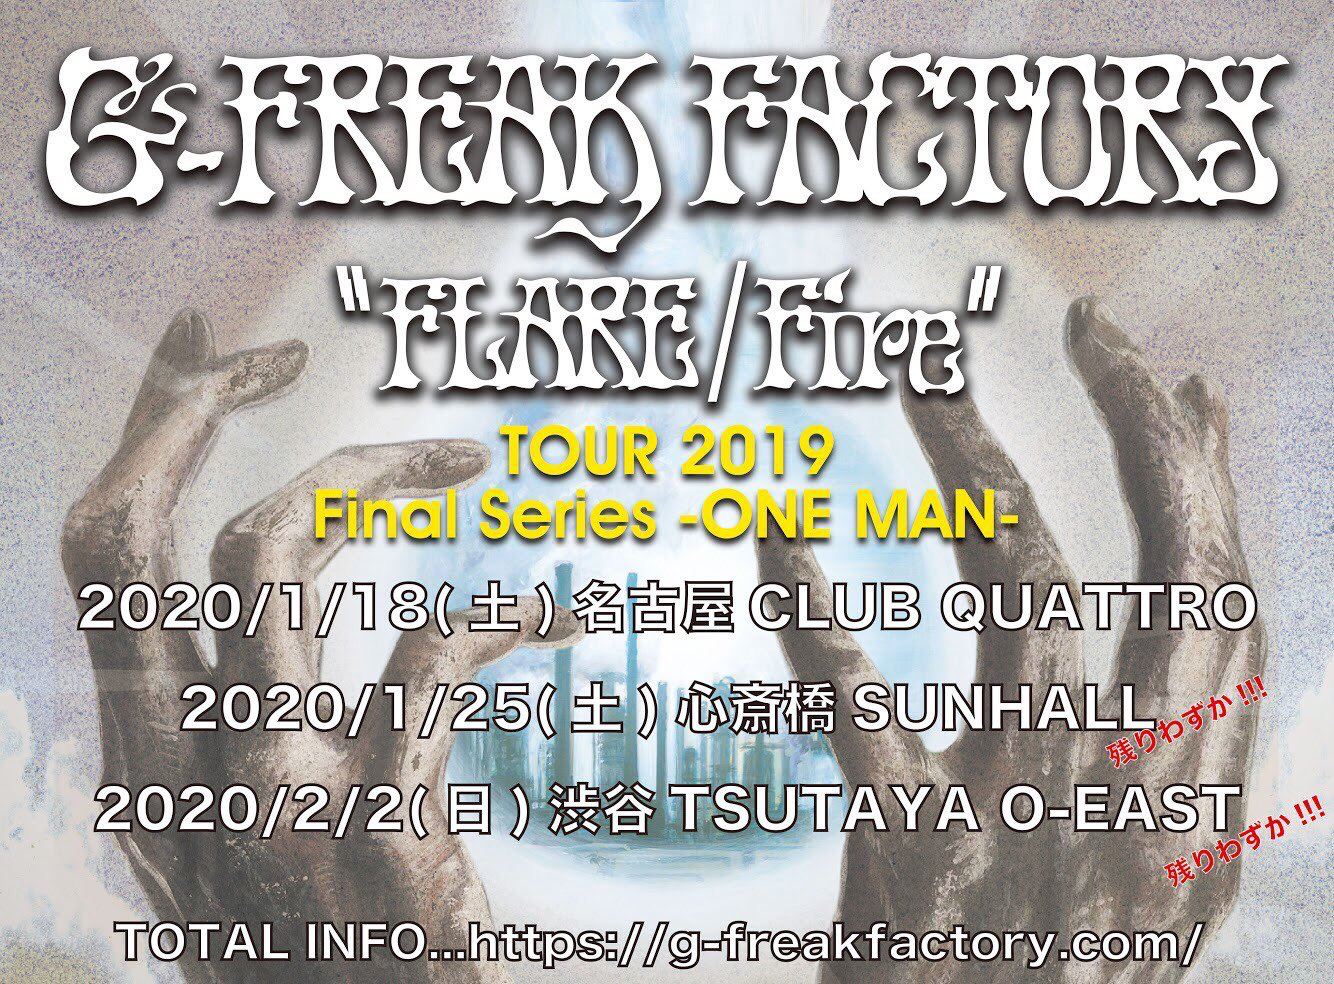 G-FREAK FACTORY “FLARE/Fire” TOUR 2019 Final Series -ONE MAN-